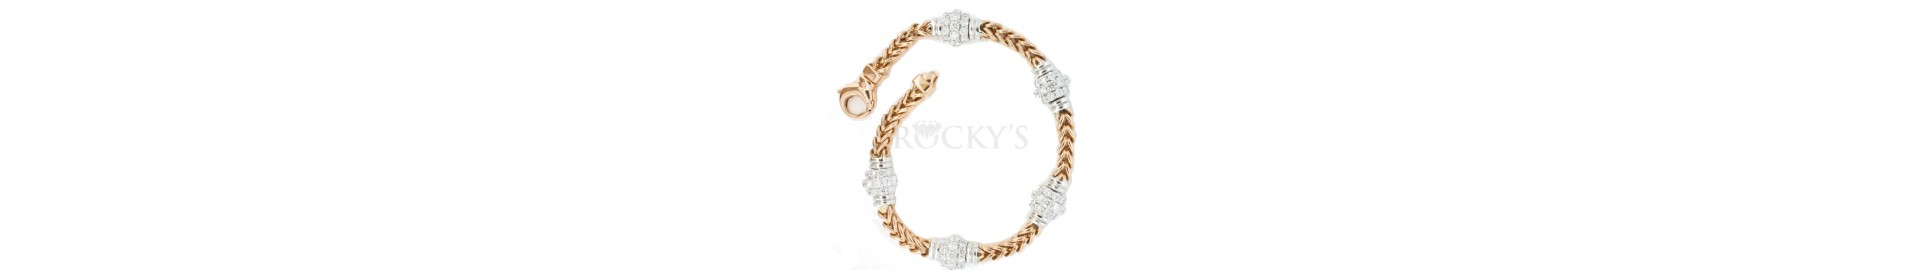 Buy Online Bracelet From Rocky's Diamond Gallery Cayman